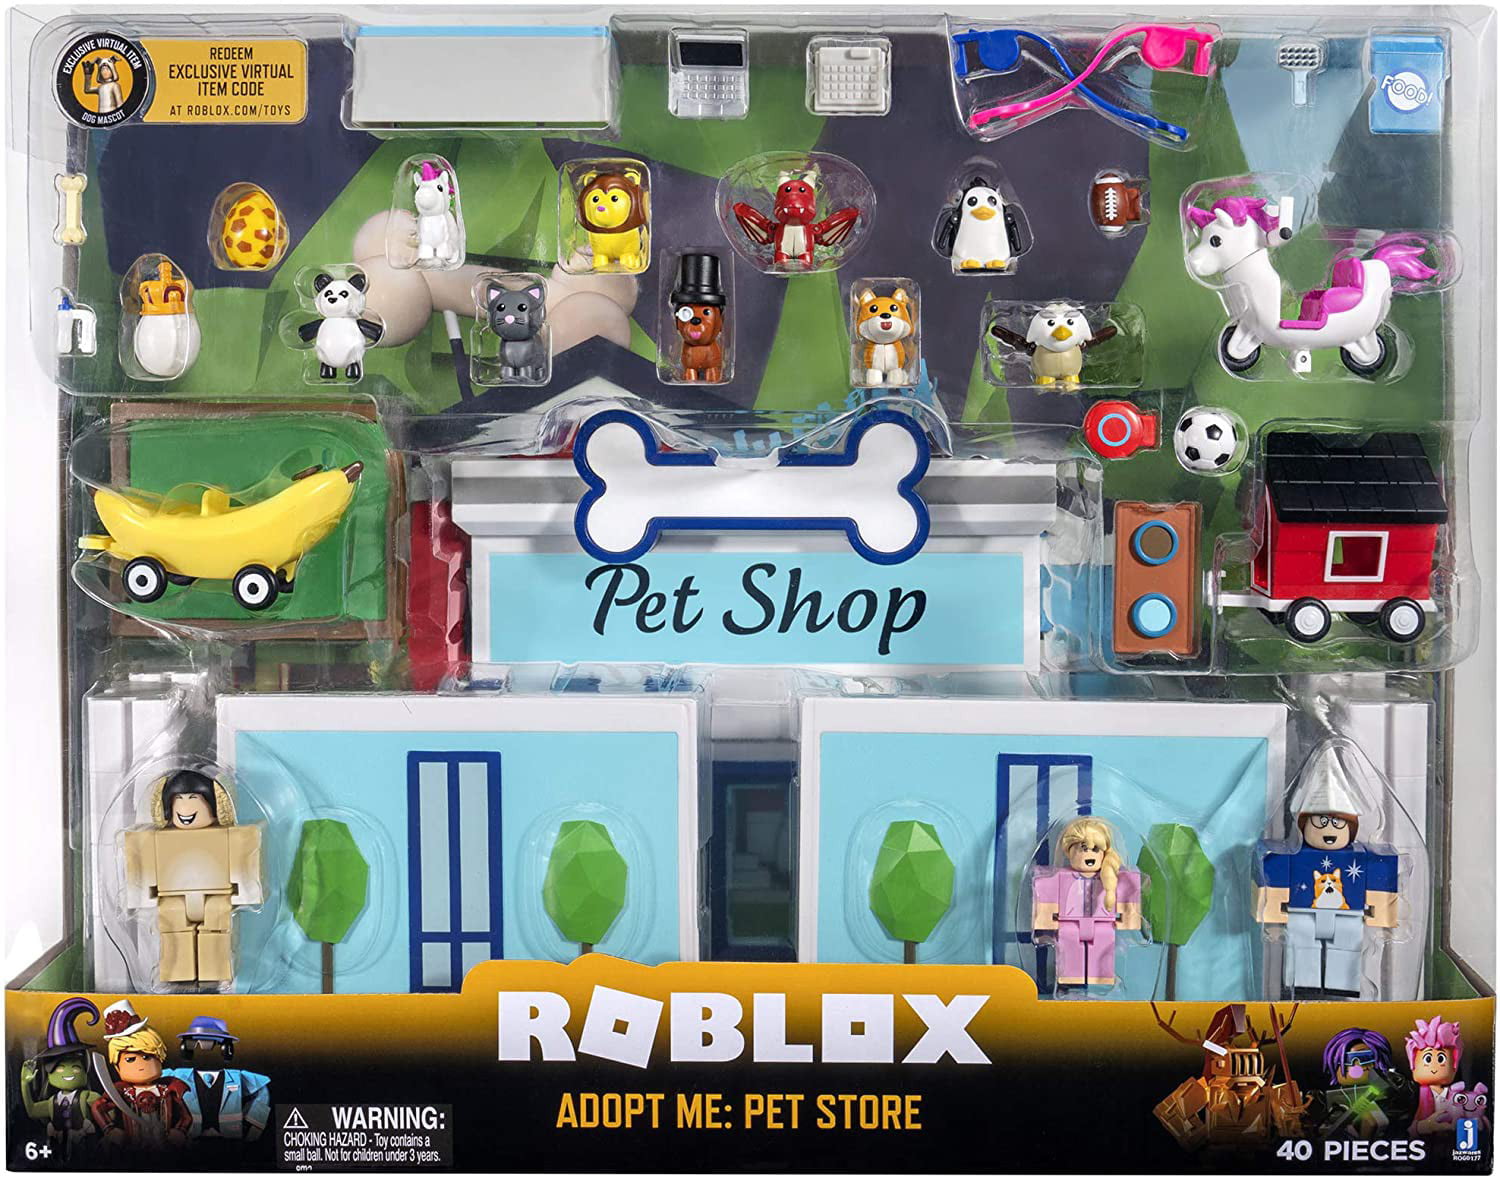 Roblox Celebrity Collection Adopt Me Pet Store Figure Set Walmart Com Walmart Com - roblox lego batman games